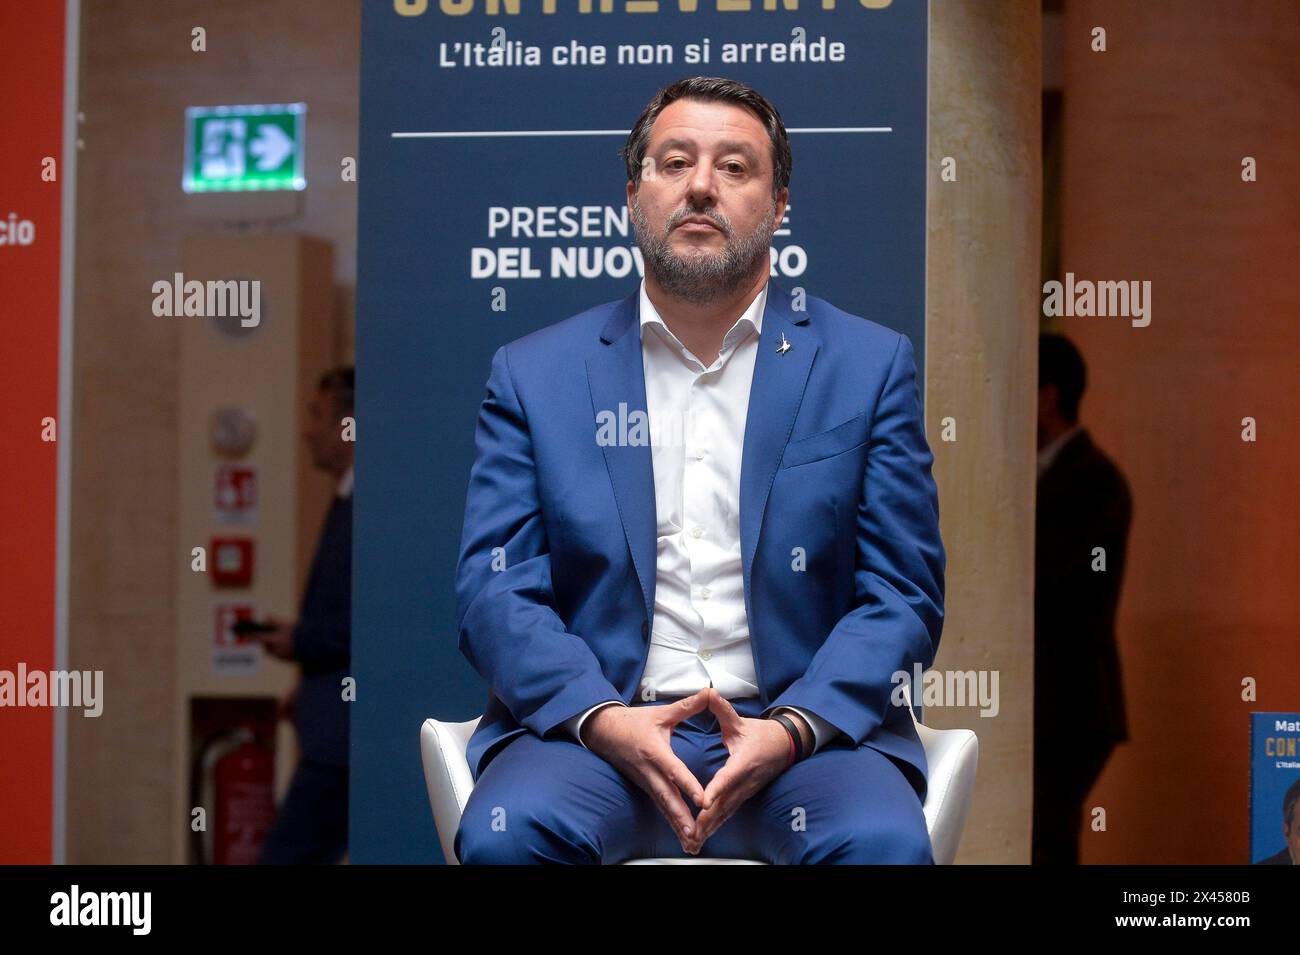 Italie, Rome, 30 avril 2024 : Temple Adriano, Matteo Salvini présente son livre 'Controvento' (contre le vent) photo © Stefano Carofei/Sintesi/Alamy Live News Banque D'Images